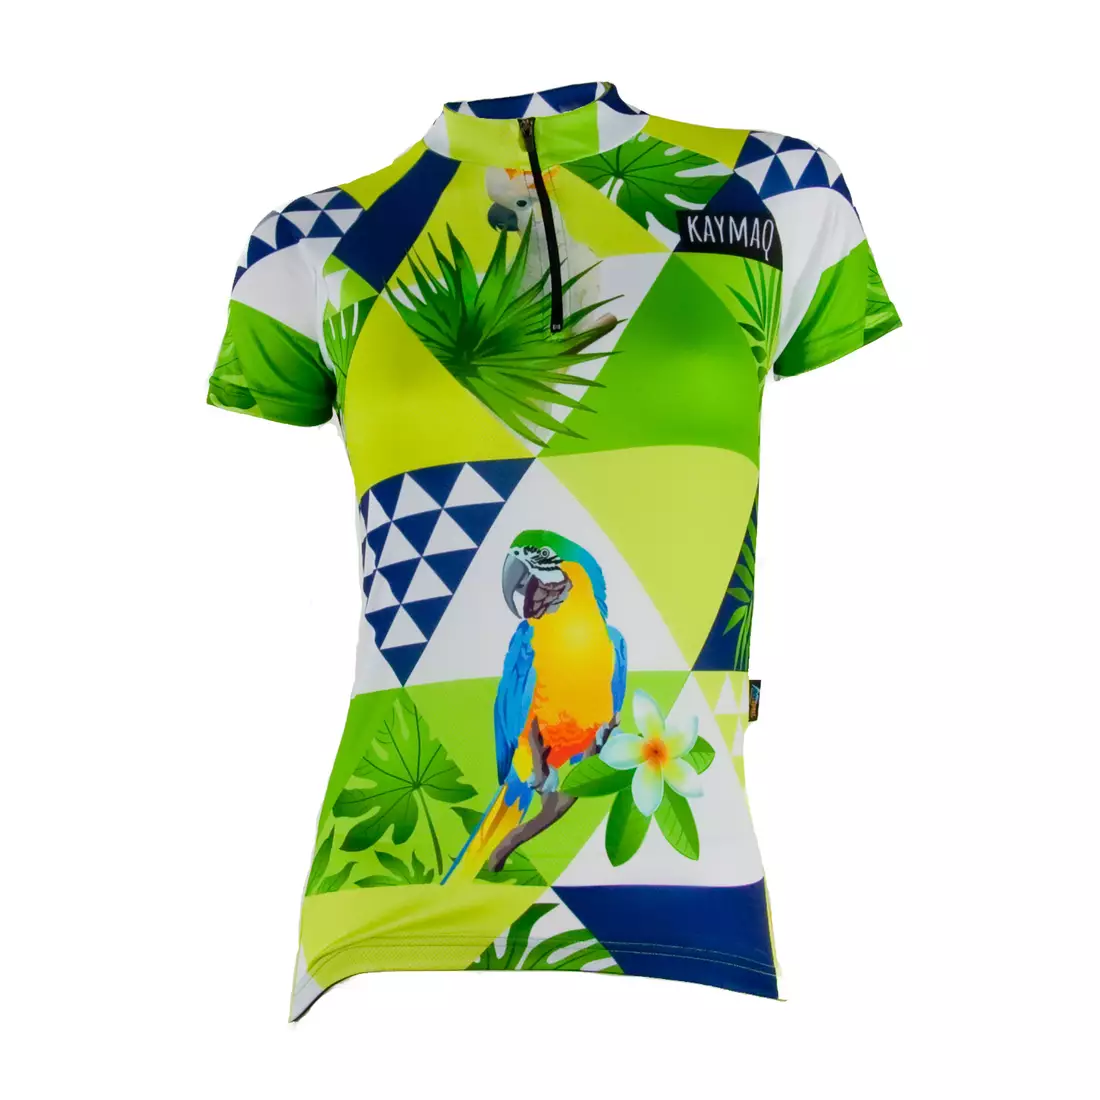 KAYMAQ PR1 women's cycling jersey